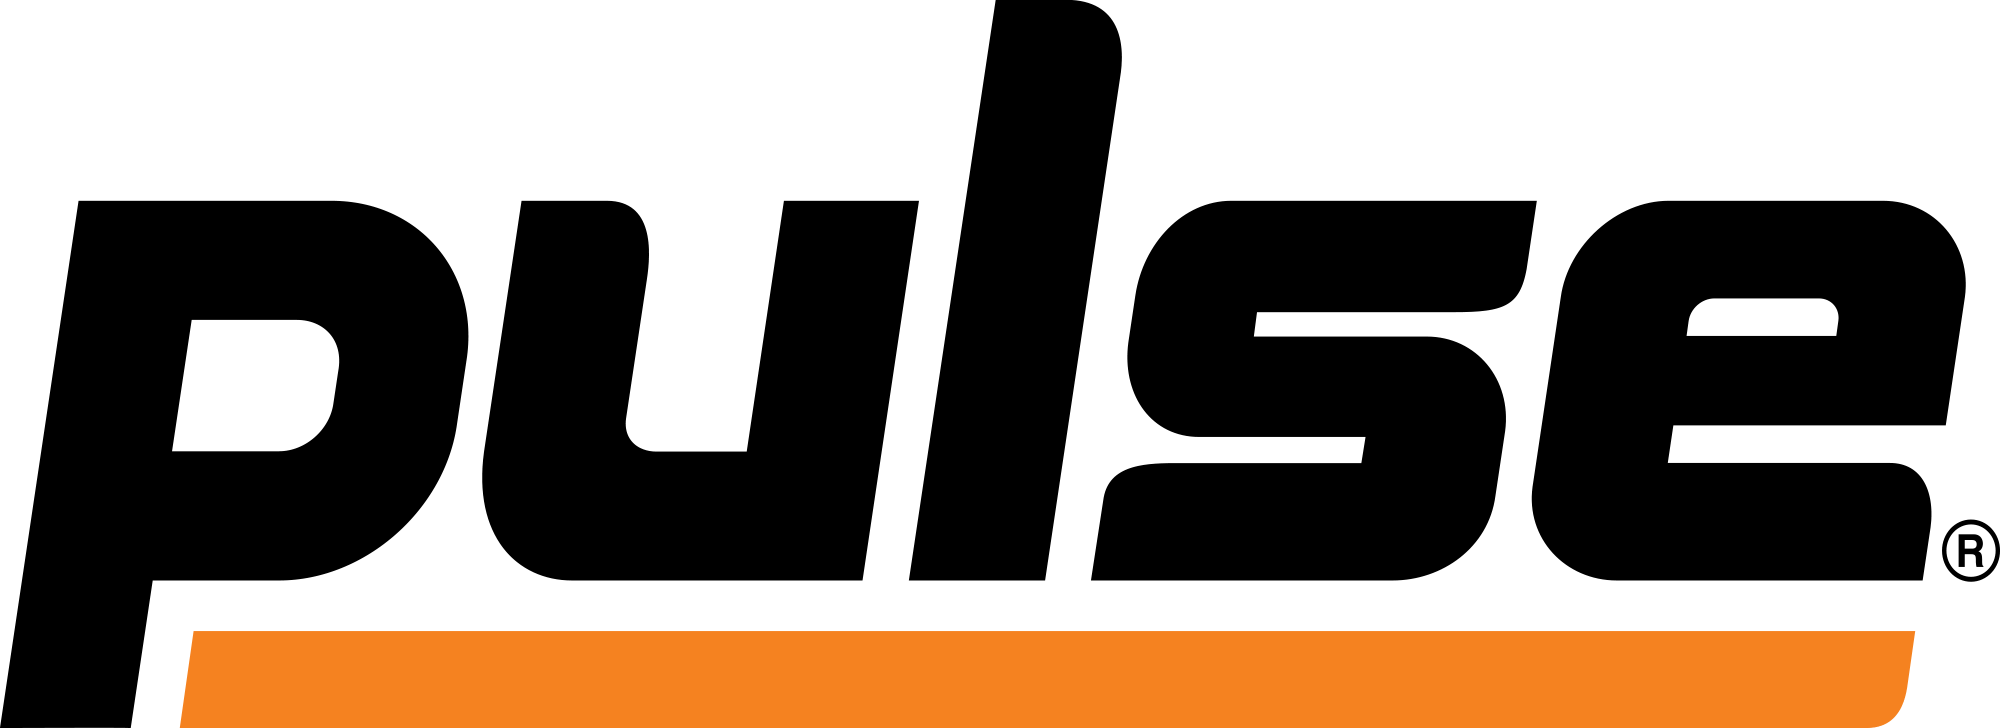 Pulse Logo - PULSE Reproduction Art